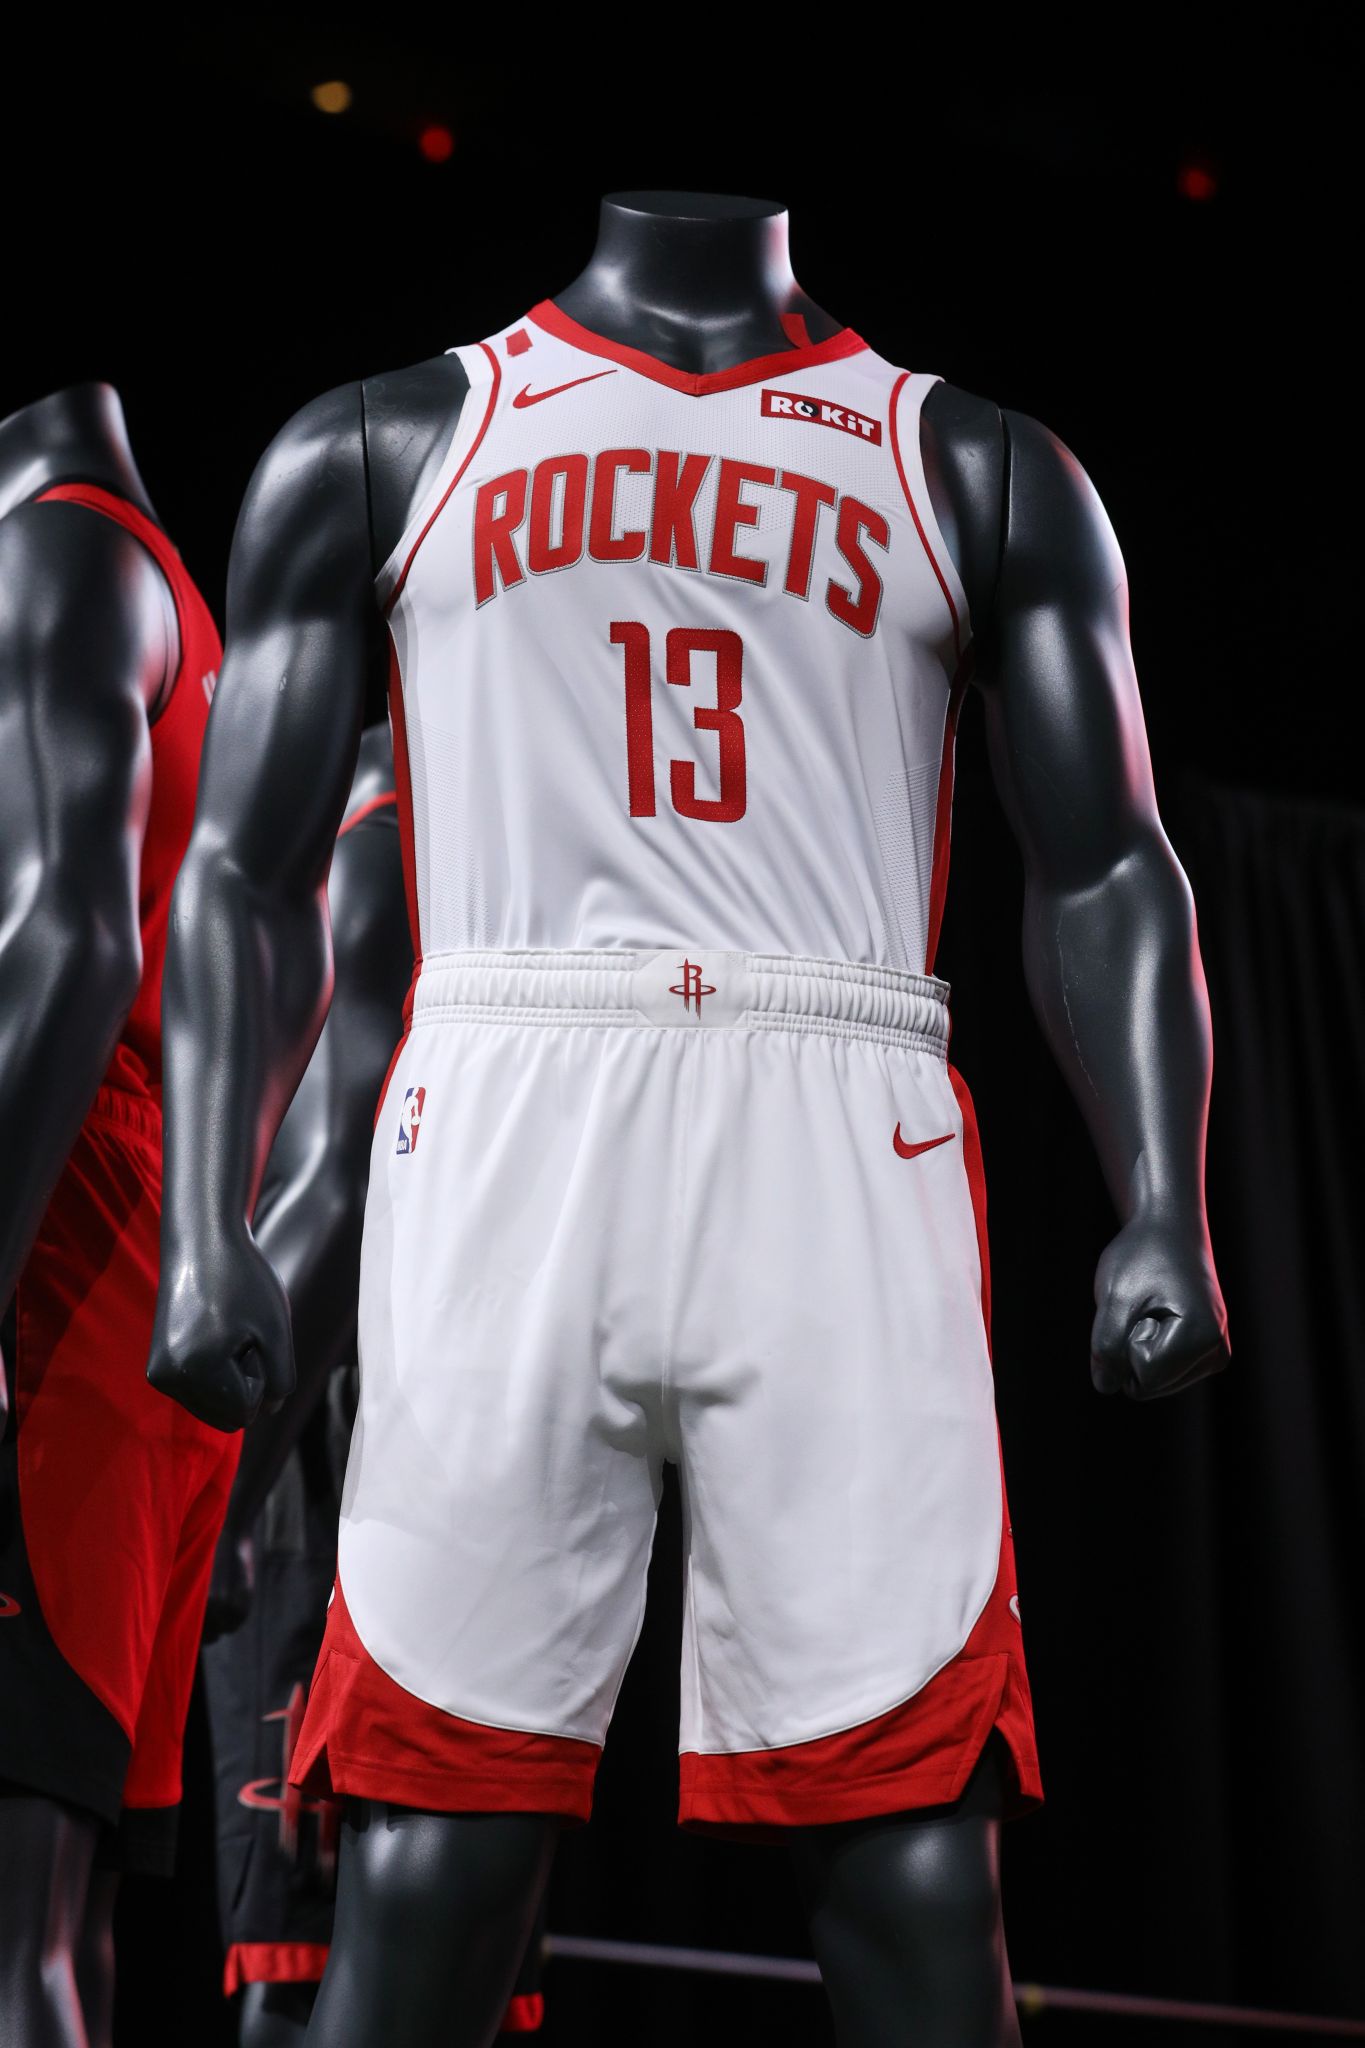 Houston Rockets Reveal New Uniform In Celebration of 75th Anniversary